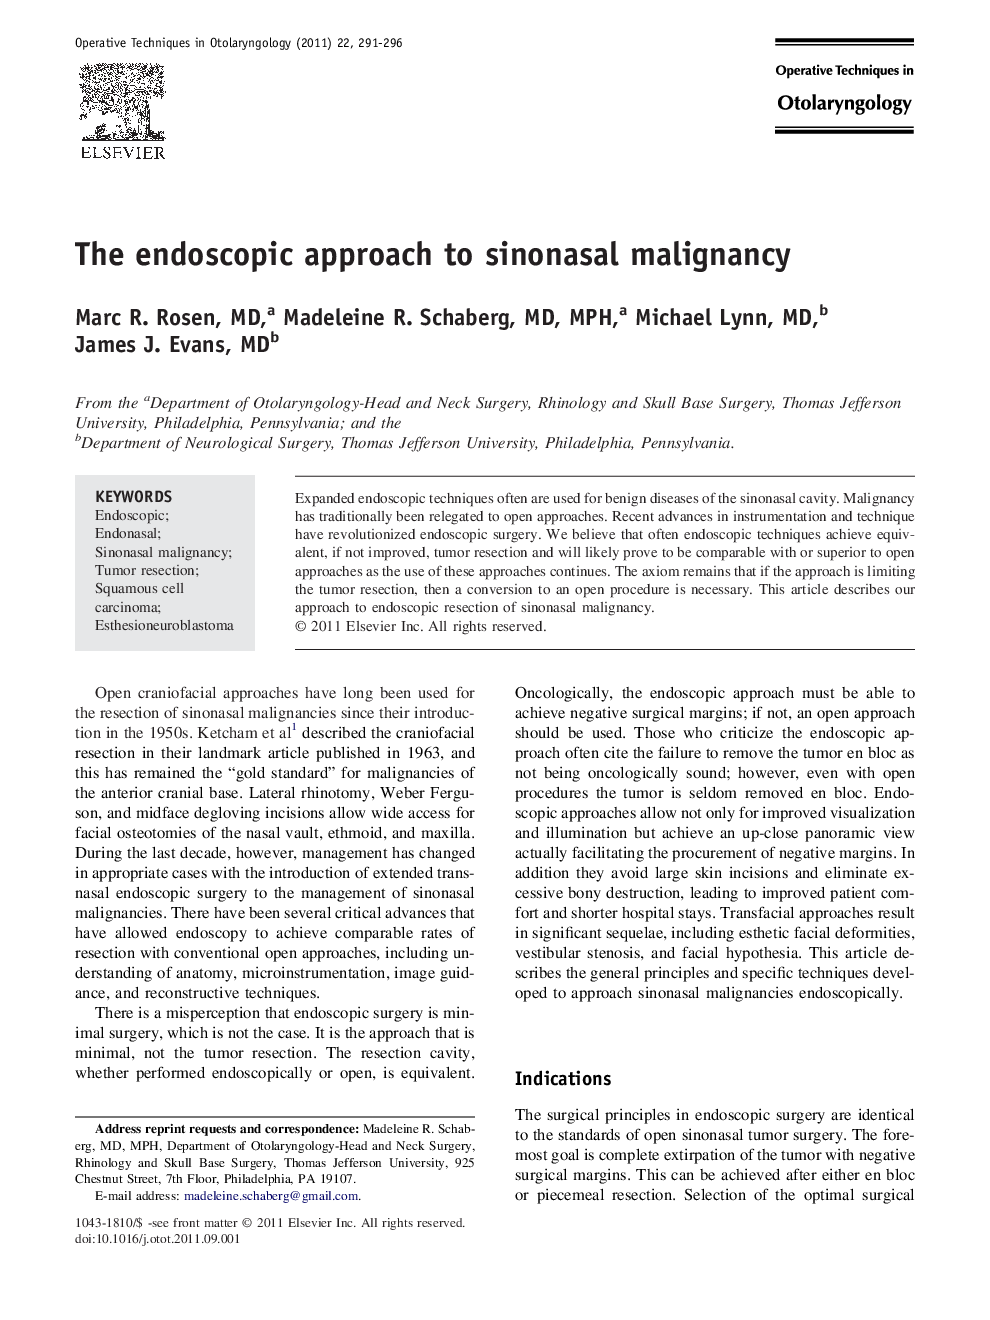 The endoscopic approach to sinonasal malignancy